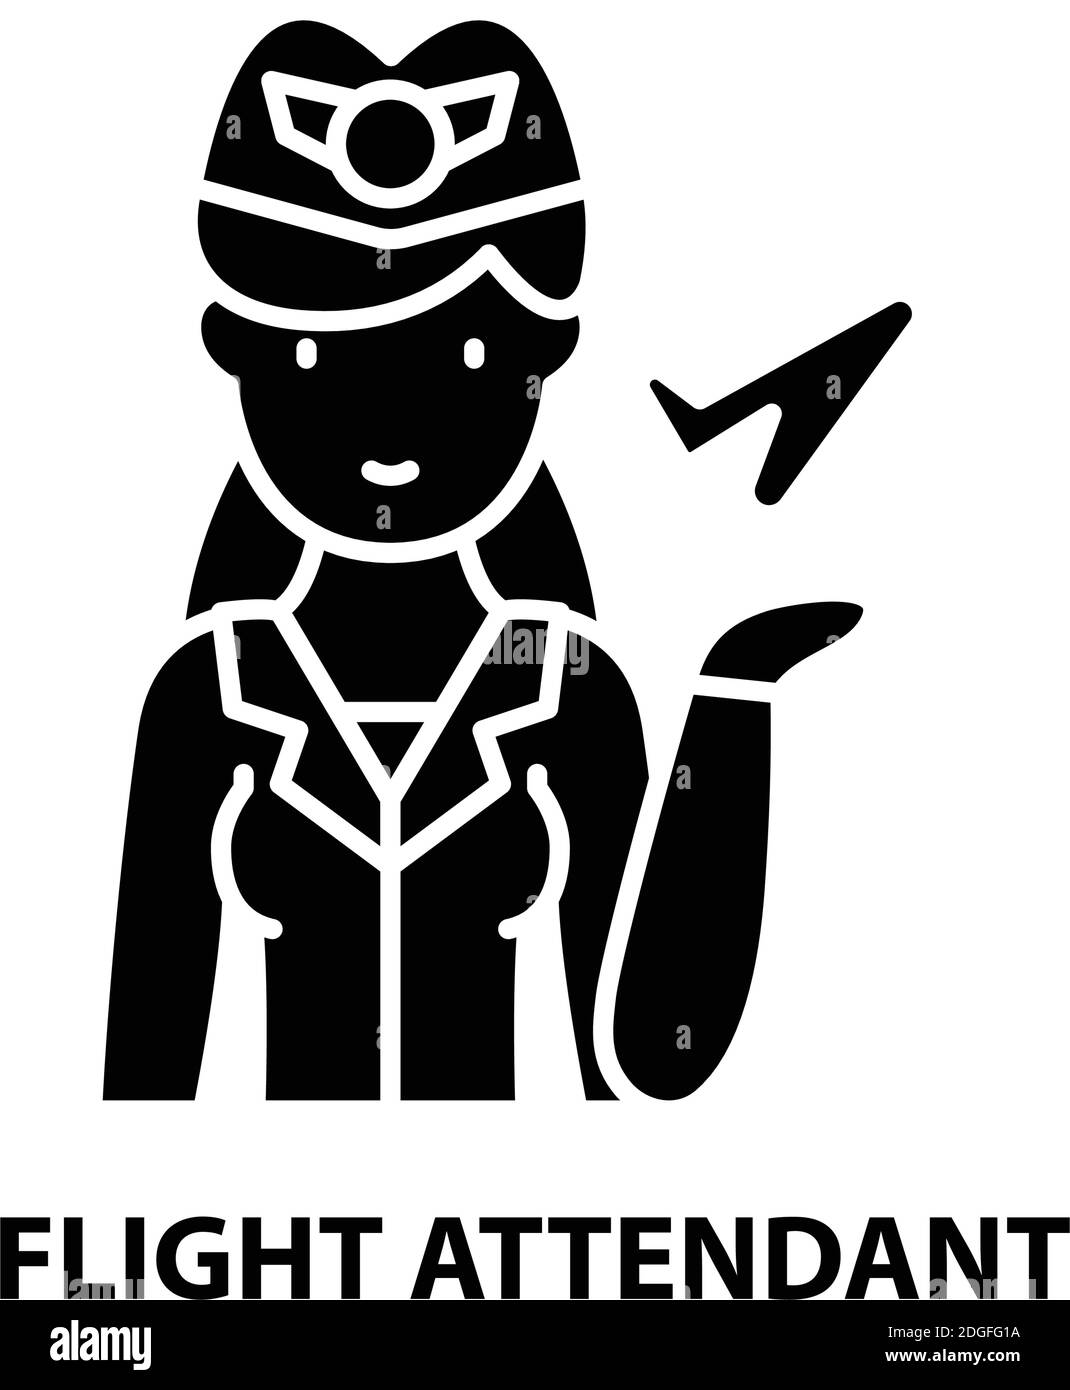 flight attendant icon, black vector sign with editable strokes, concept illustration Stock Vector